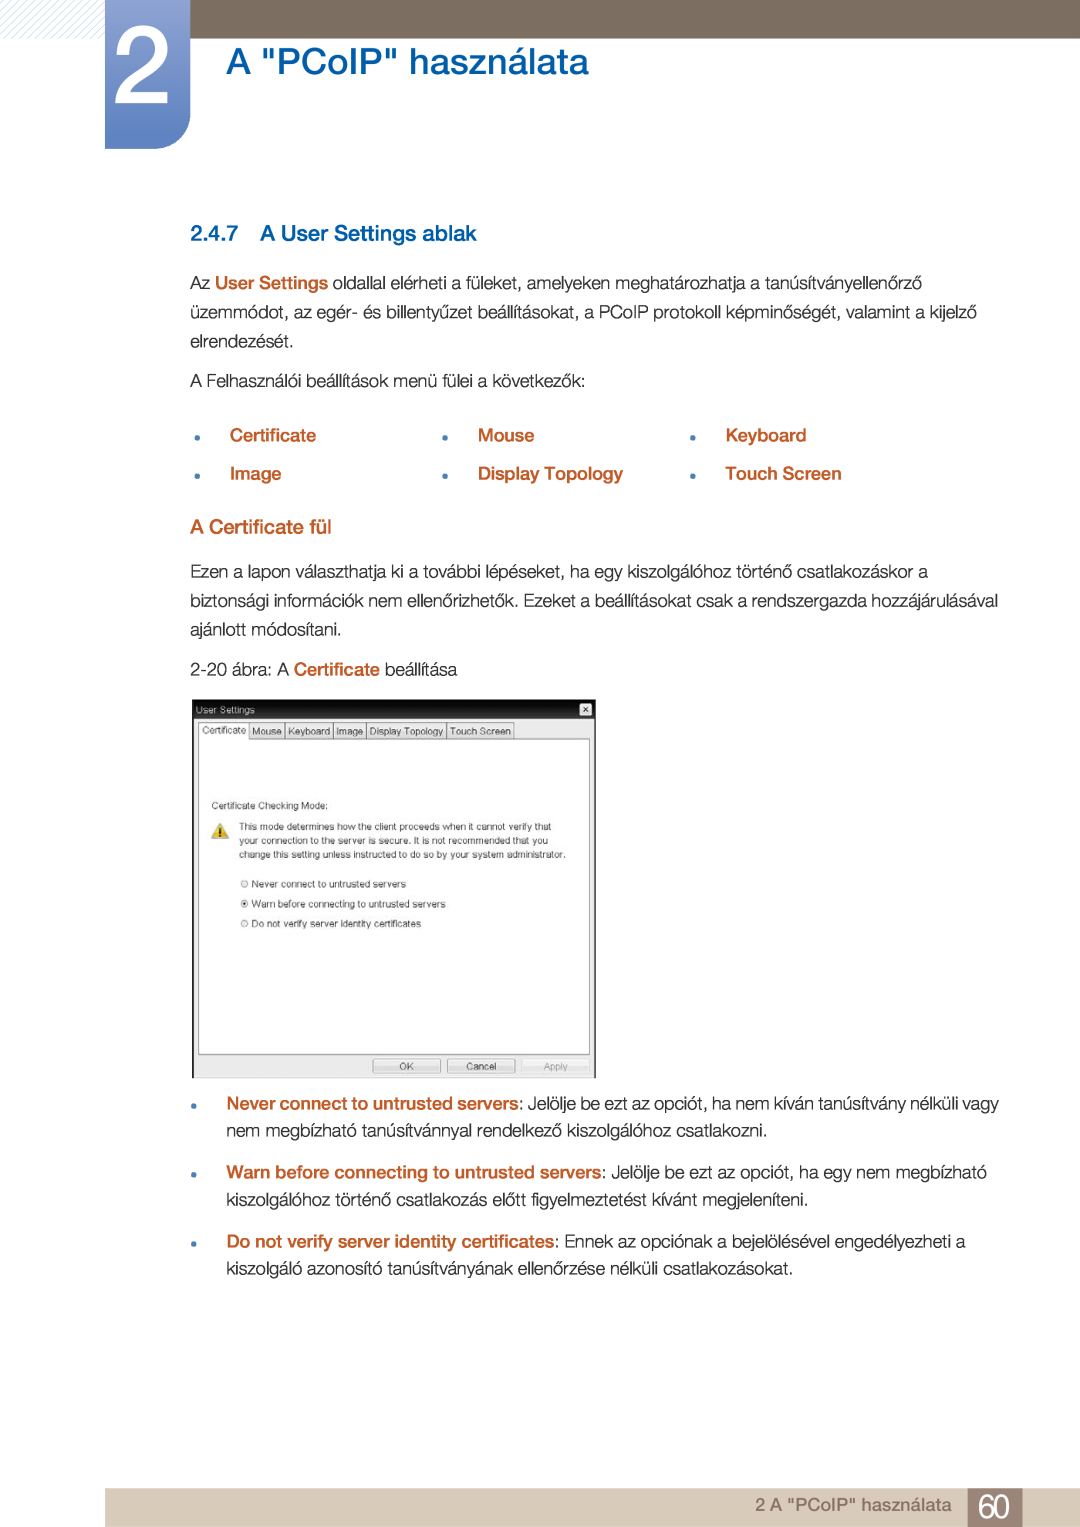 Samsung LF22FN1PFBZXEN manual A User Settings ablak, A Certificate fül, A PCoIP használata, Certificate Image 